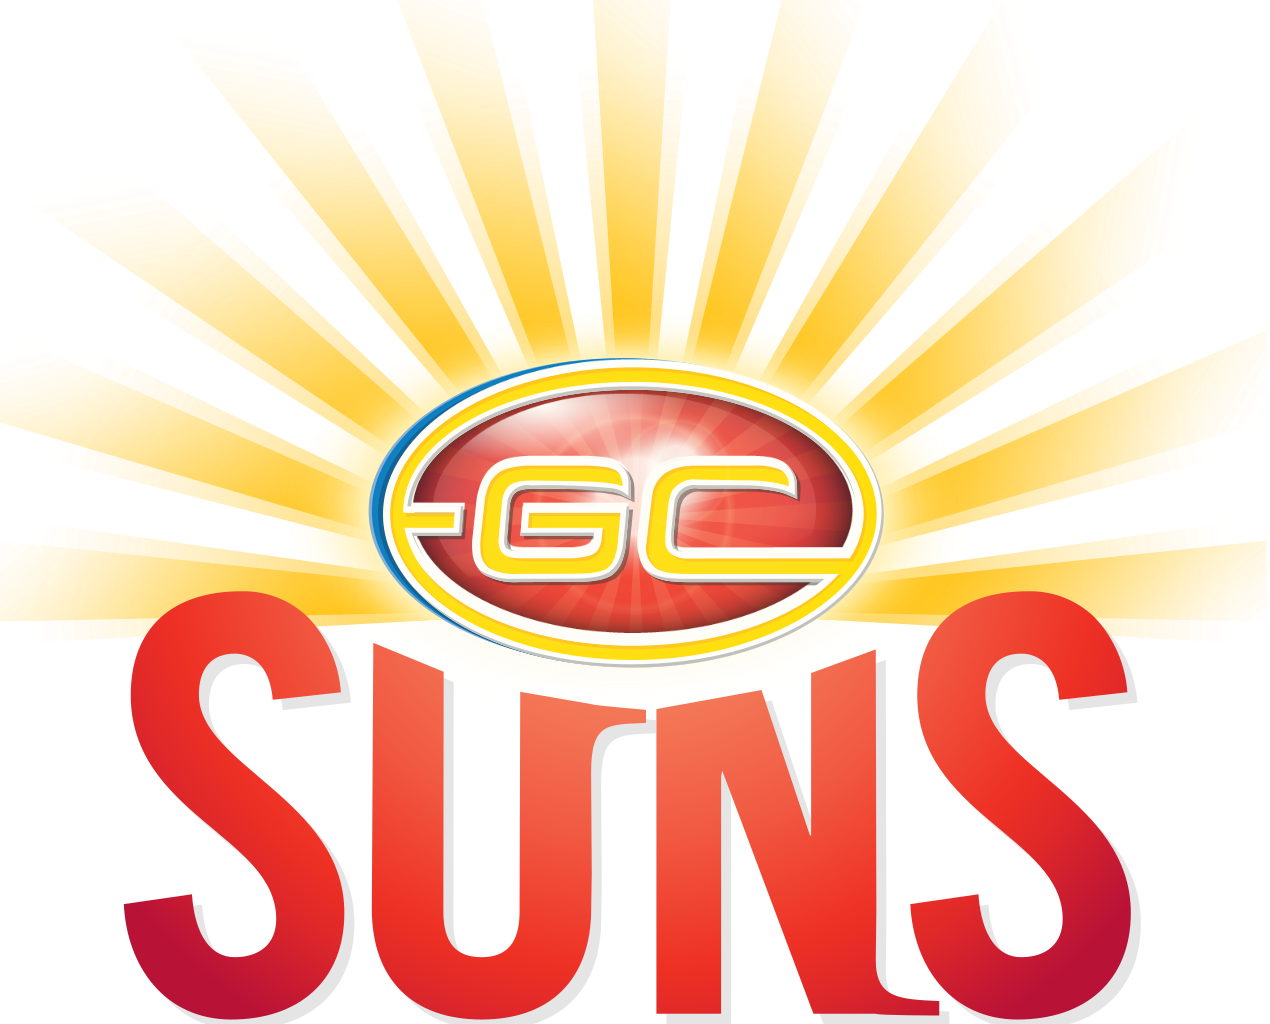 Gold Coast Suns Gold Coast Foot Centres.png